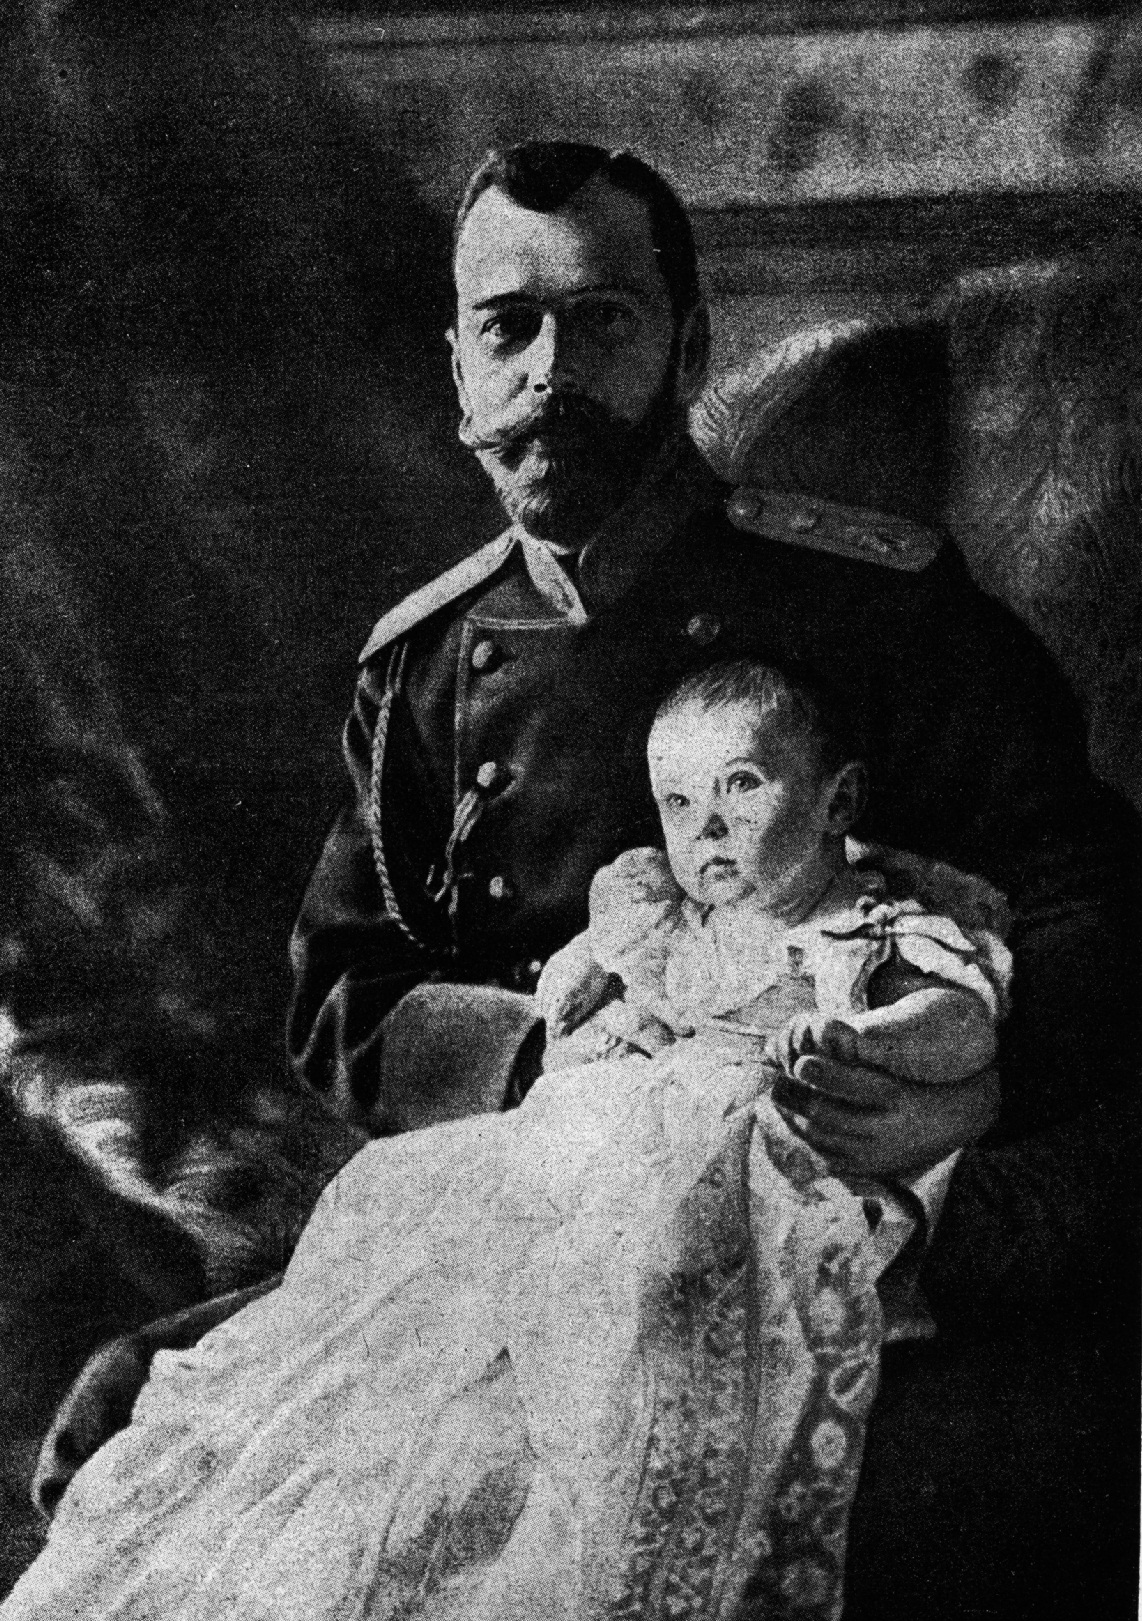 Car Mikul II. s careviem Alexejem Nikolajeviem